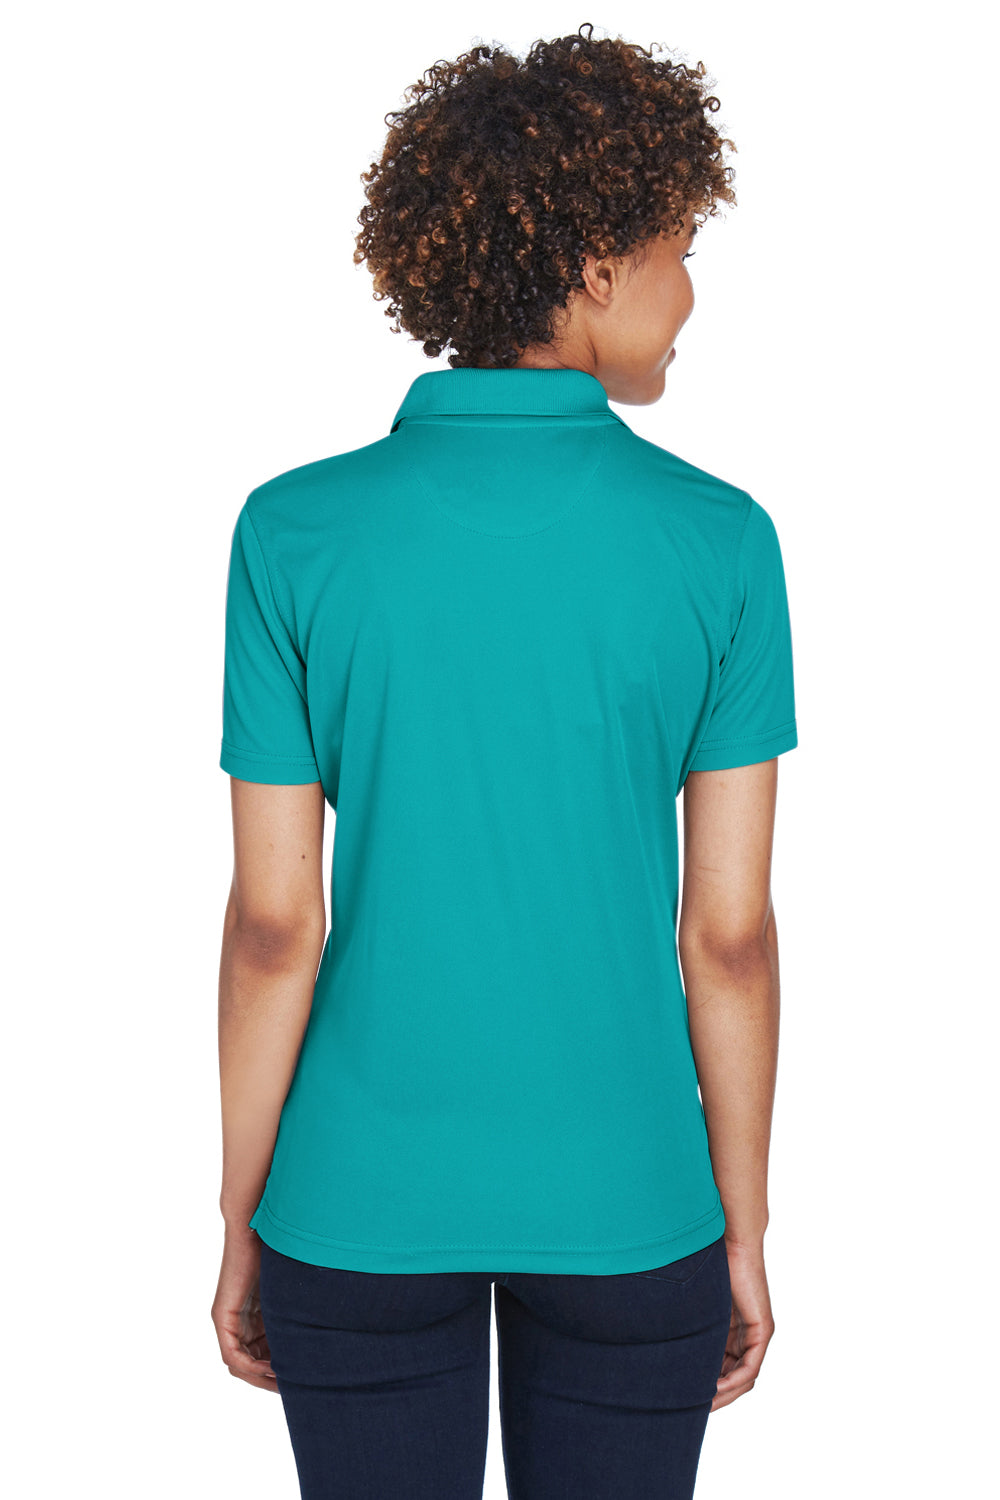 UltraClub 8210L Womens Cool & Dry Moisture Wicking Short Sleeve Polo Shirt Jade Green Back